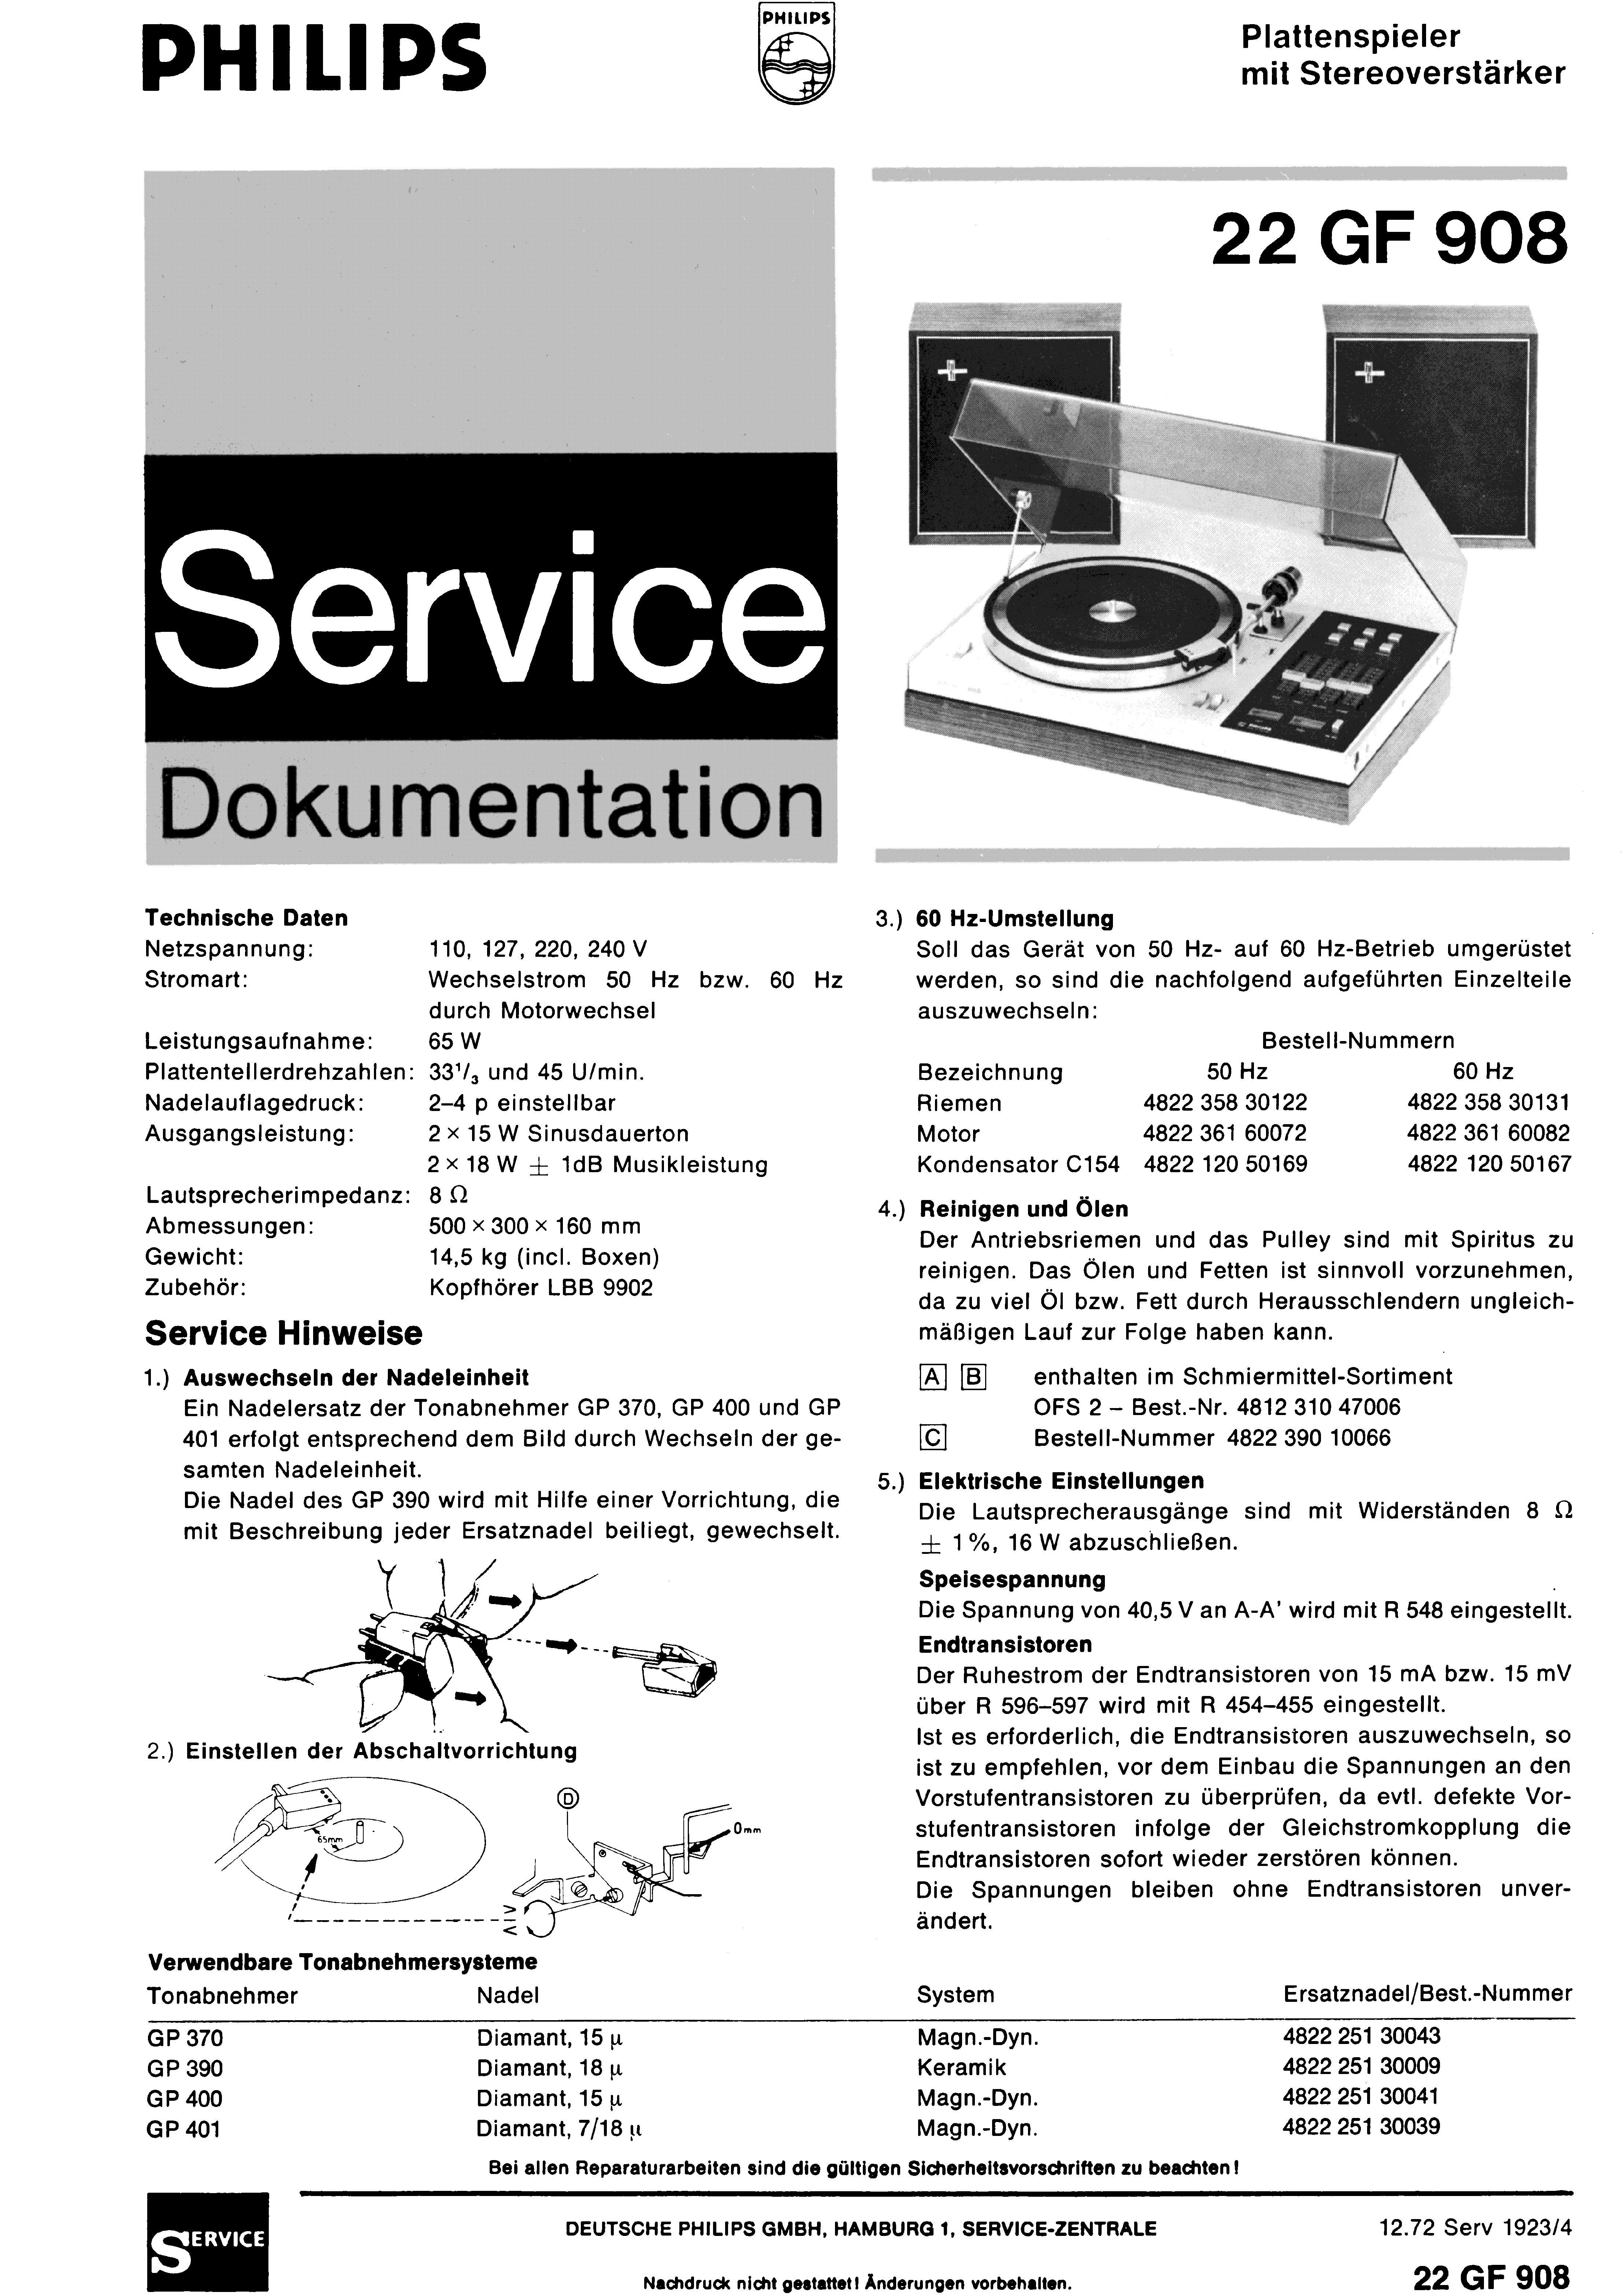 PHILIPS 22GF908 PLATTENSPIELER MIT STEREOVERSTAERKER SM service manual (1st page)